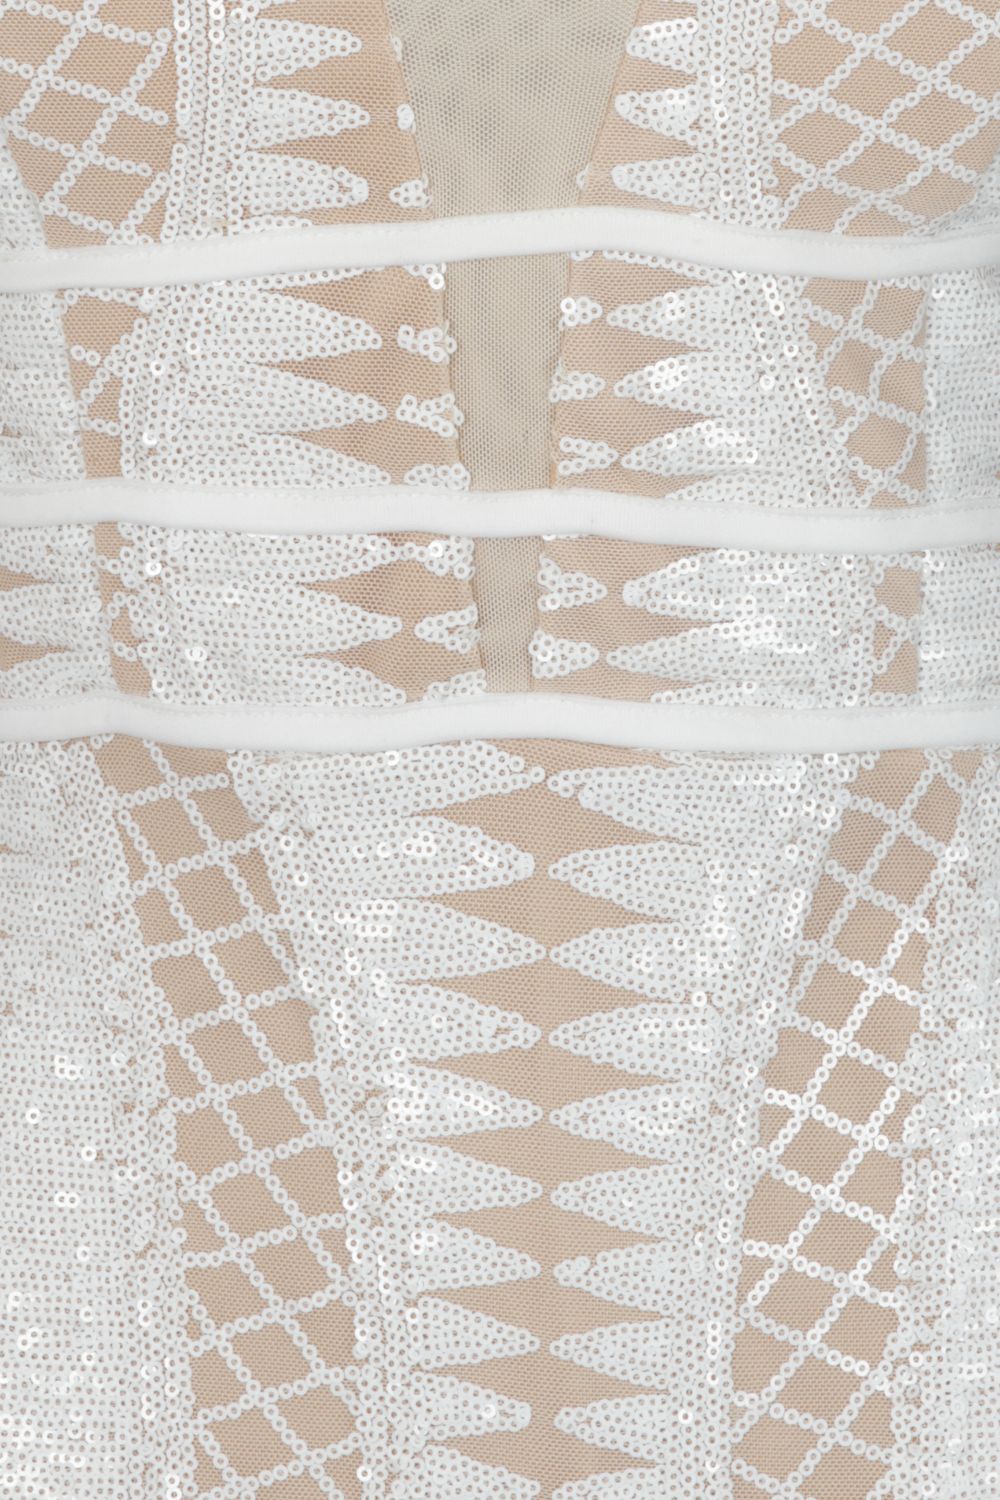 Virgo White Nude Plunge Cage Sequin Bandage Illusion Maxi Dress